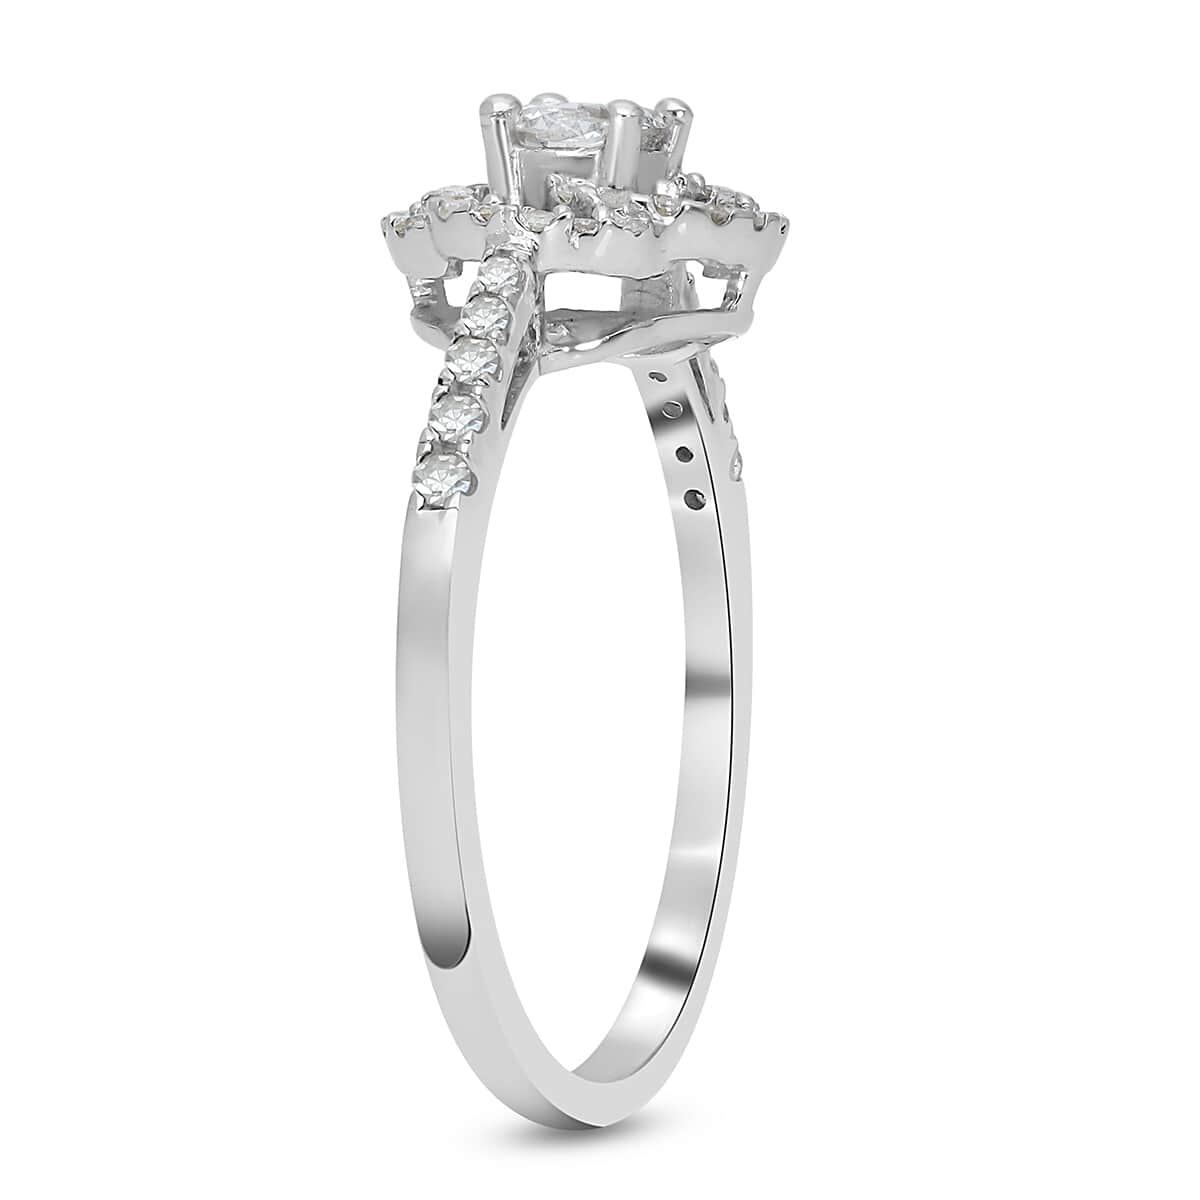 Luxoro 10K White Gold G-H I2-I3 Diamond Ring, Promise Rings (Size 9.0) 0.50 ctw image number 3